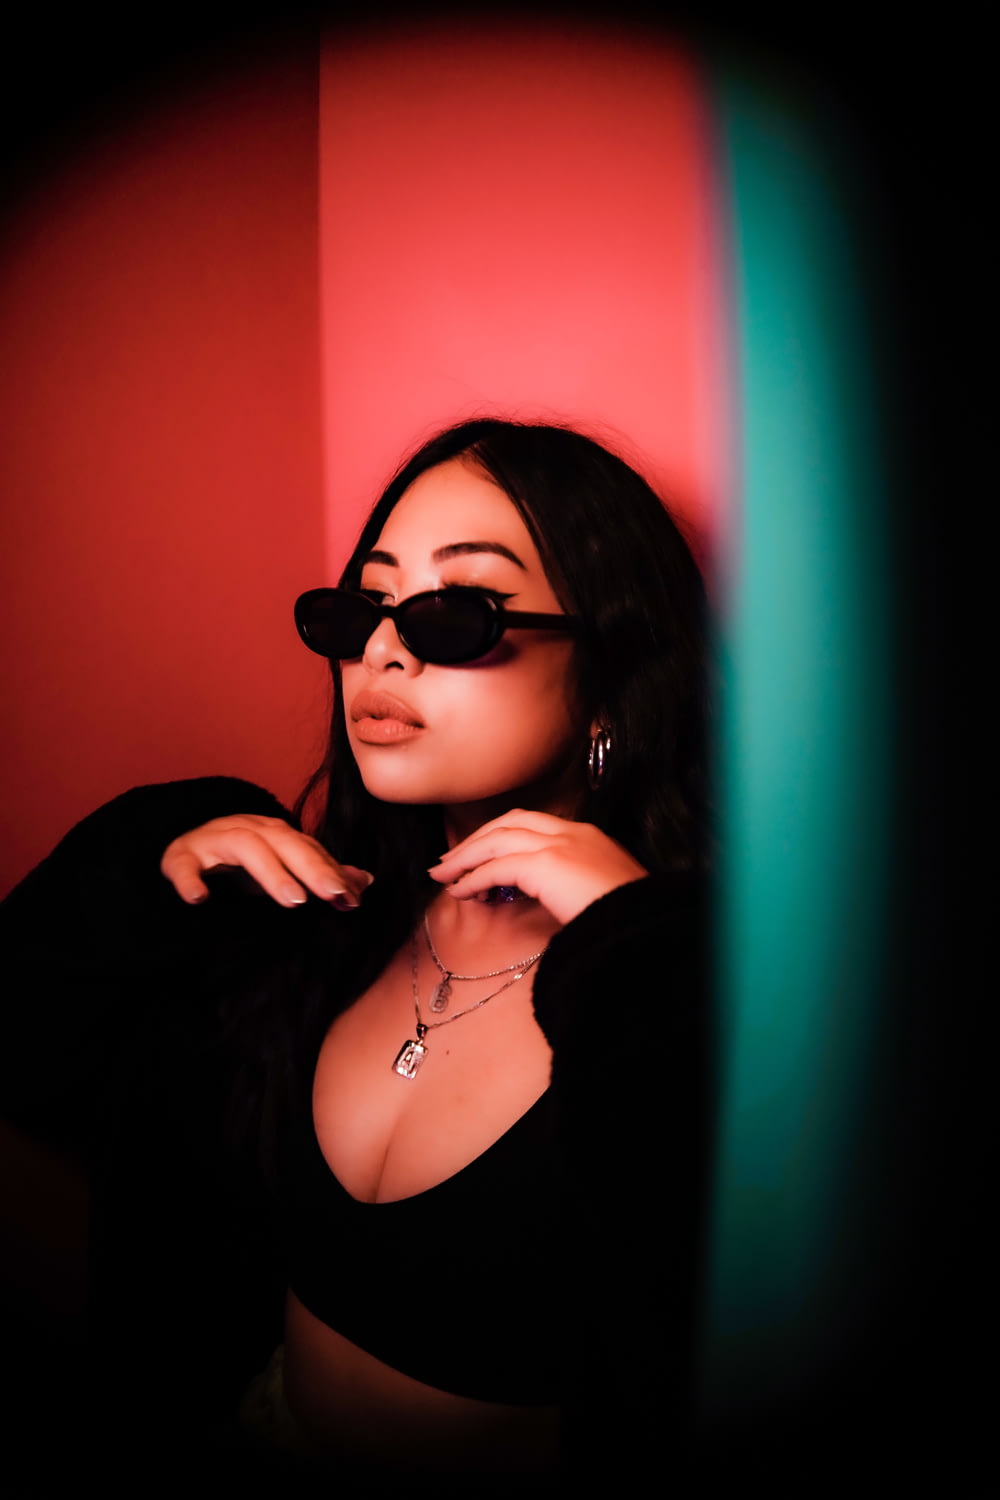 woman wearing black sunglasses leaning on wall